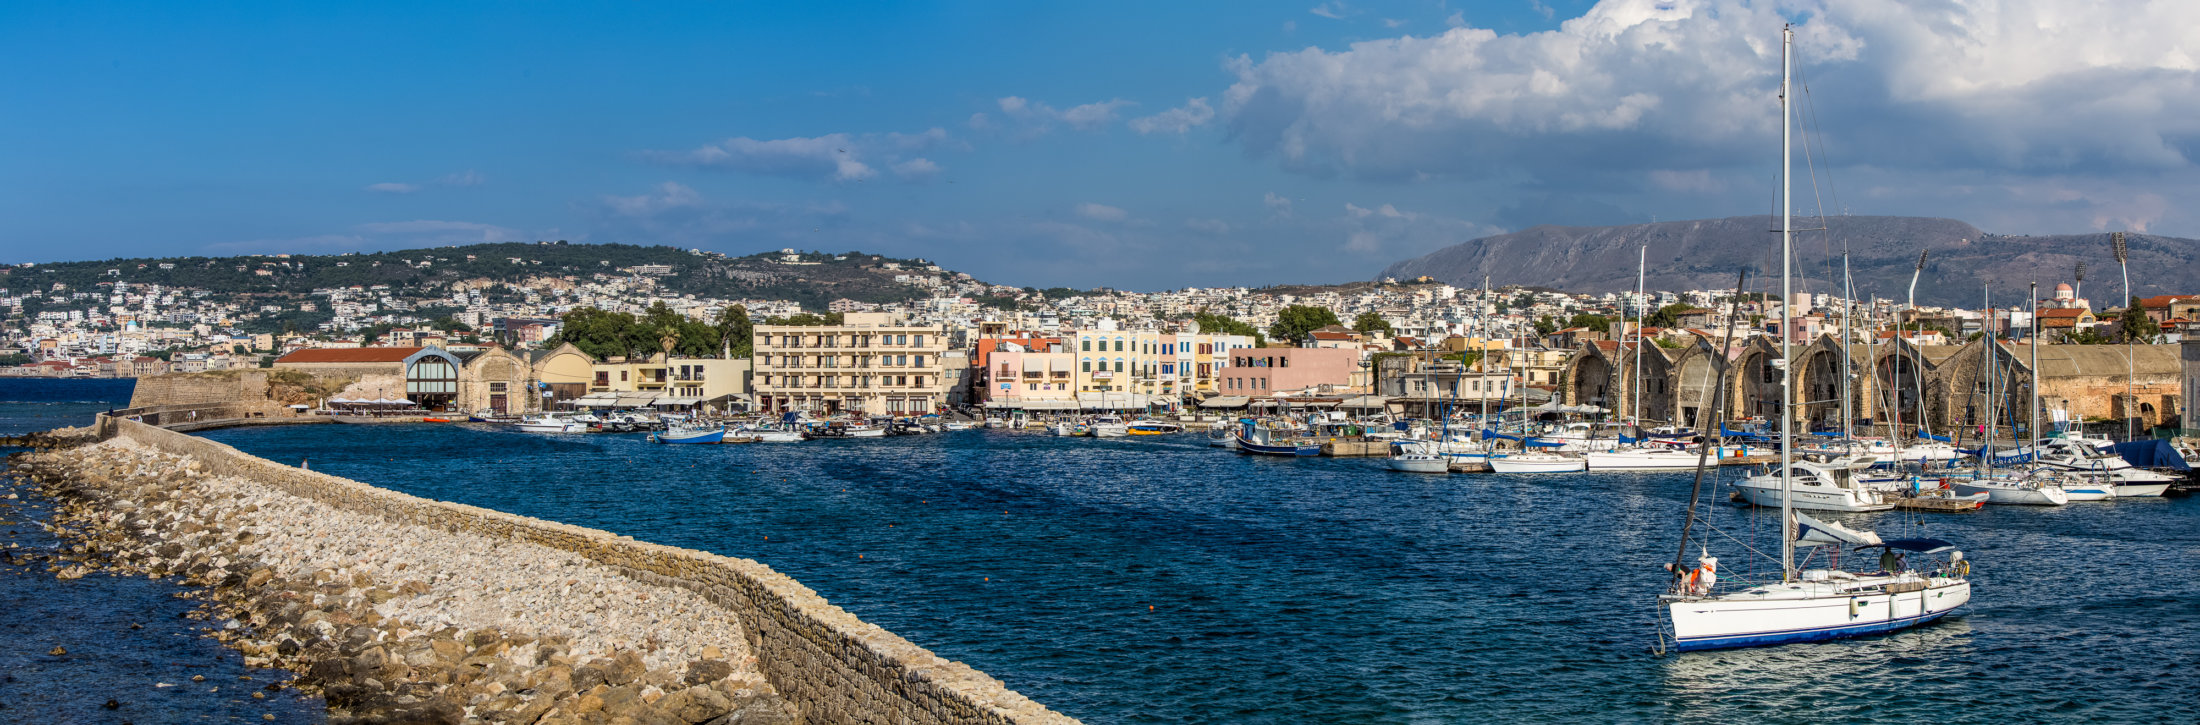 Port of Chania, Crete